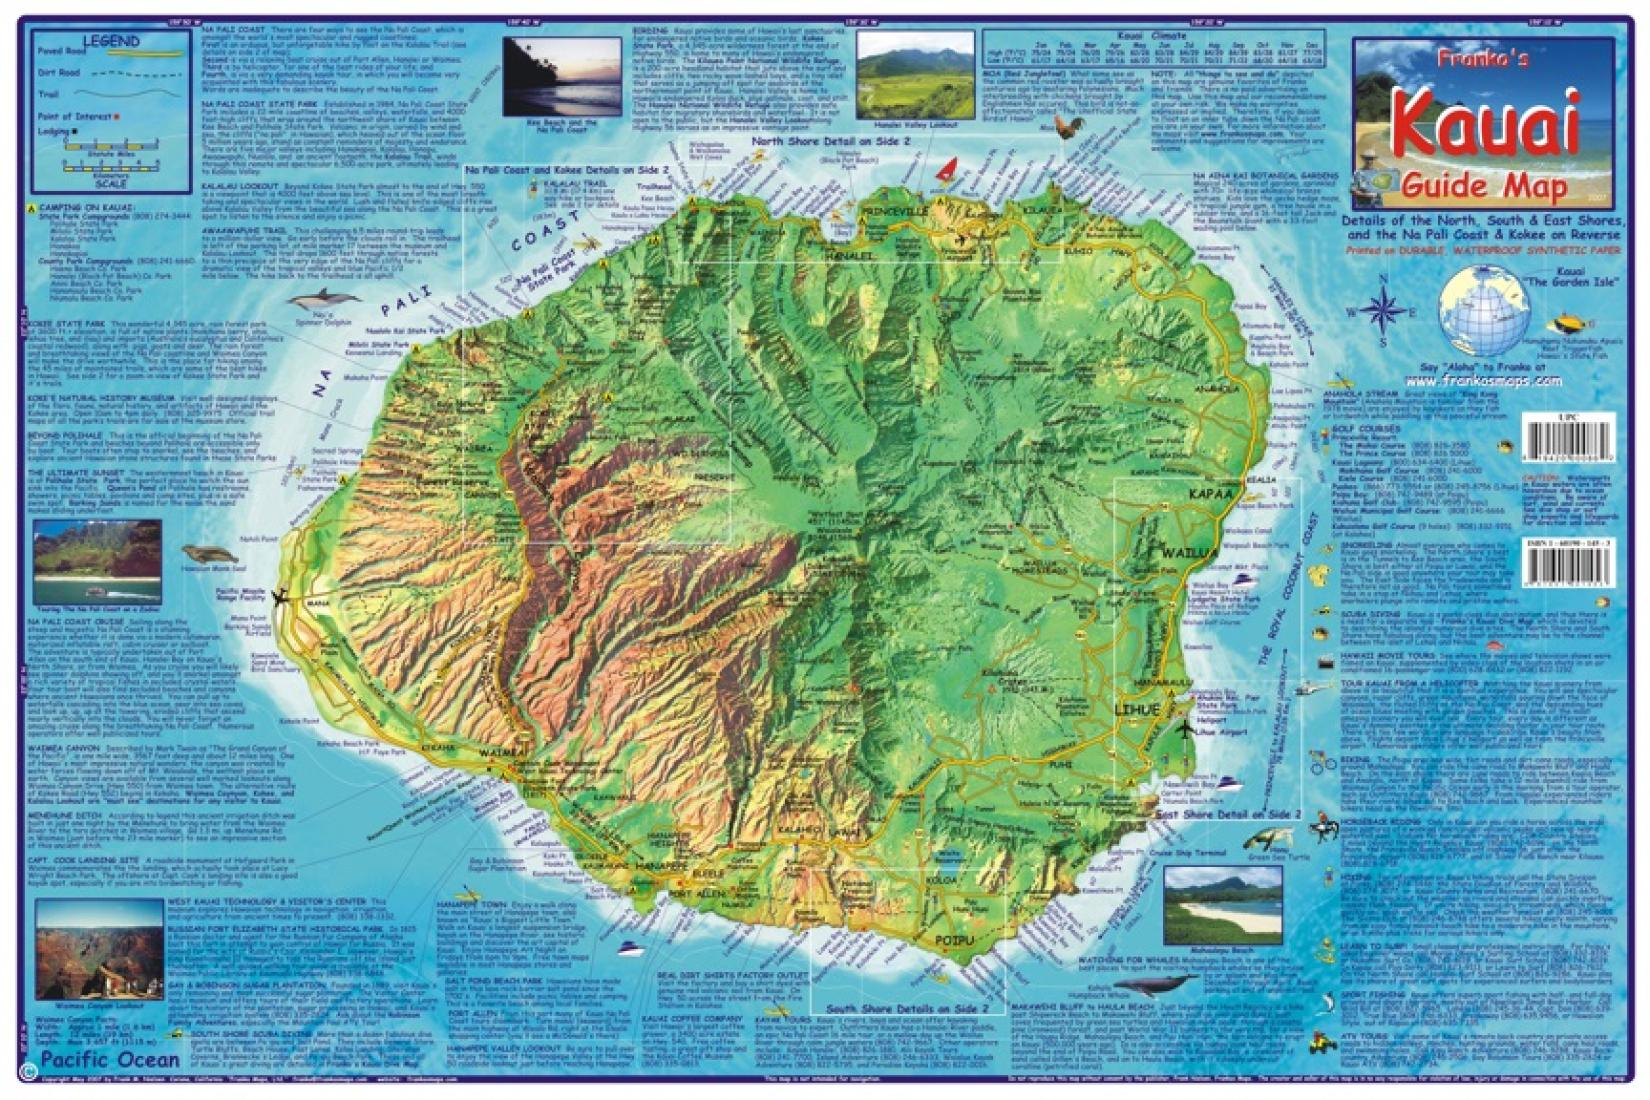 Kauai Guide Map Laminated By Frankos Maps Ltd 